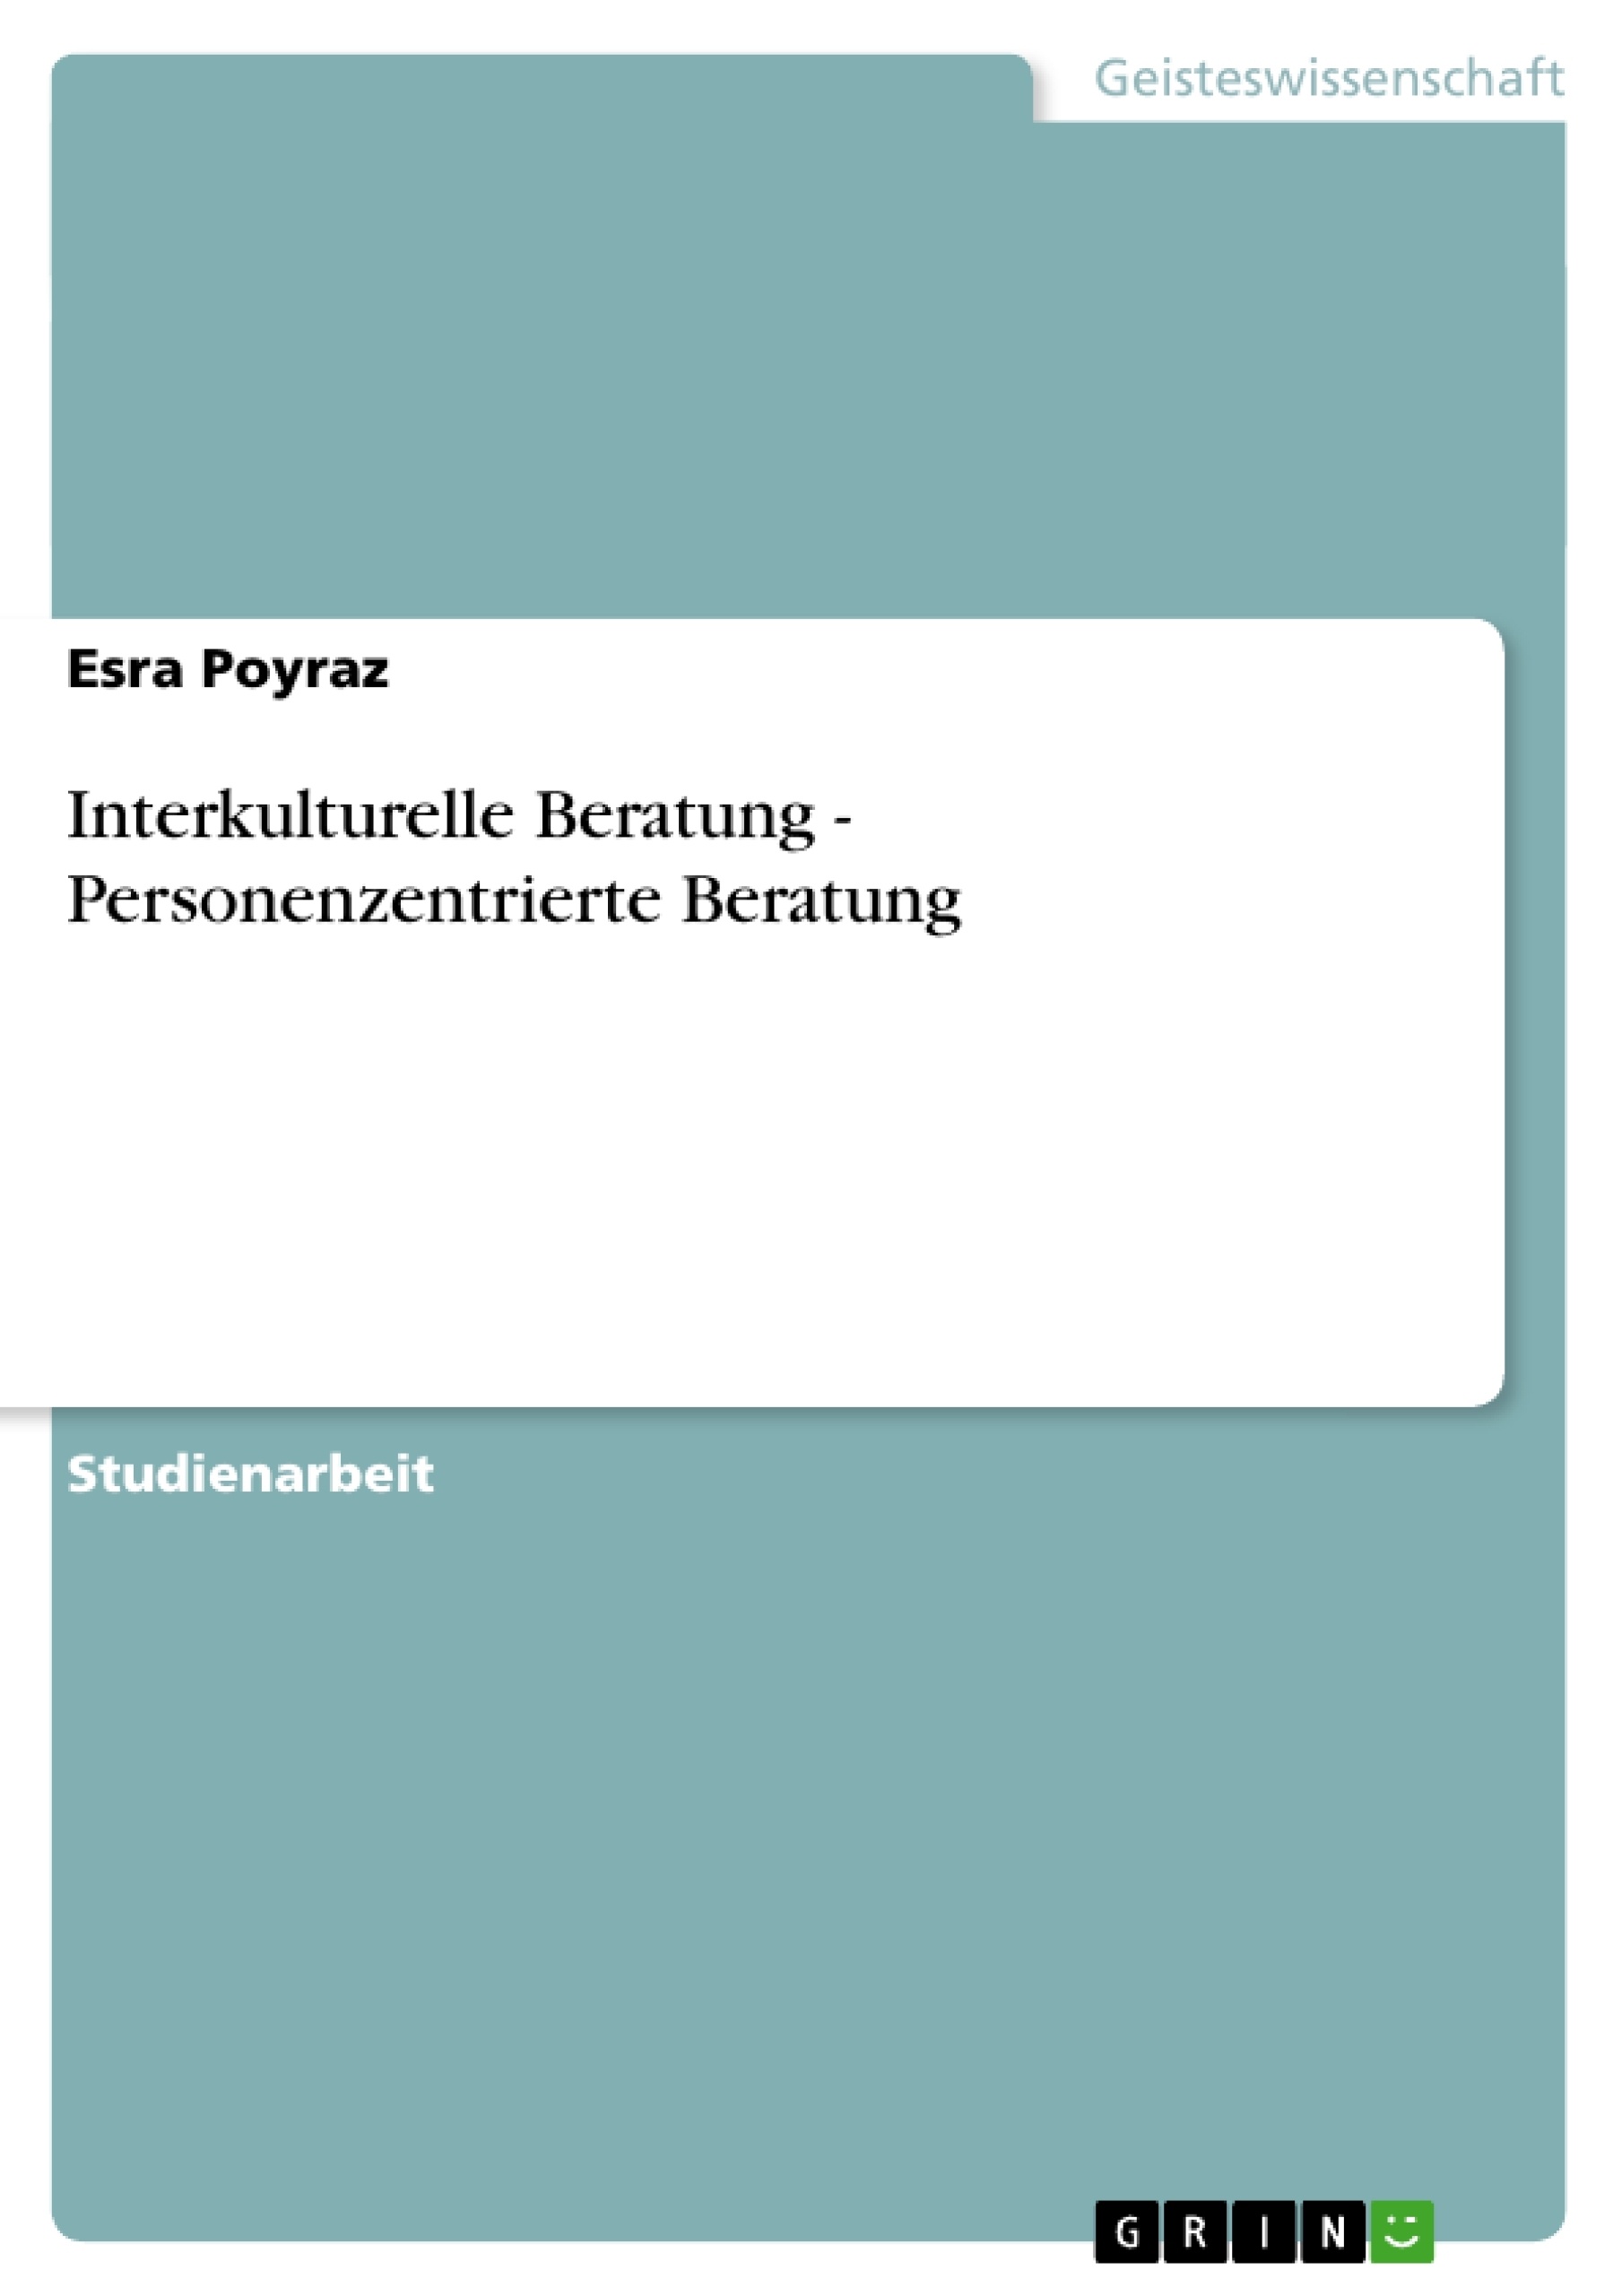 Title: Interkulturelle Beratung - Personenzentrierte Beratung